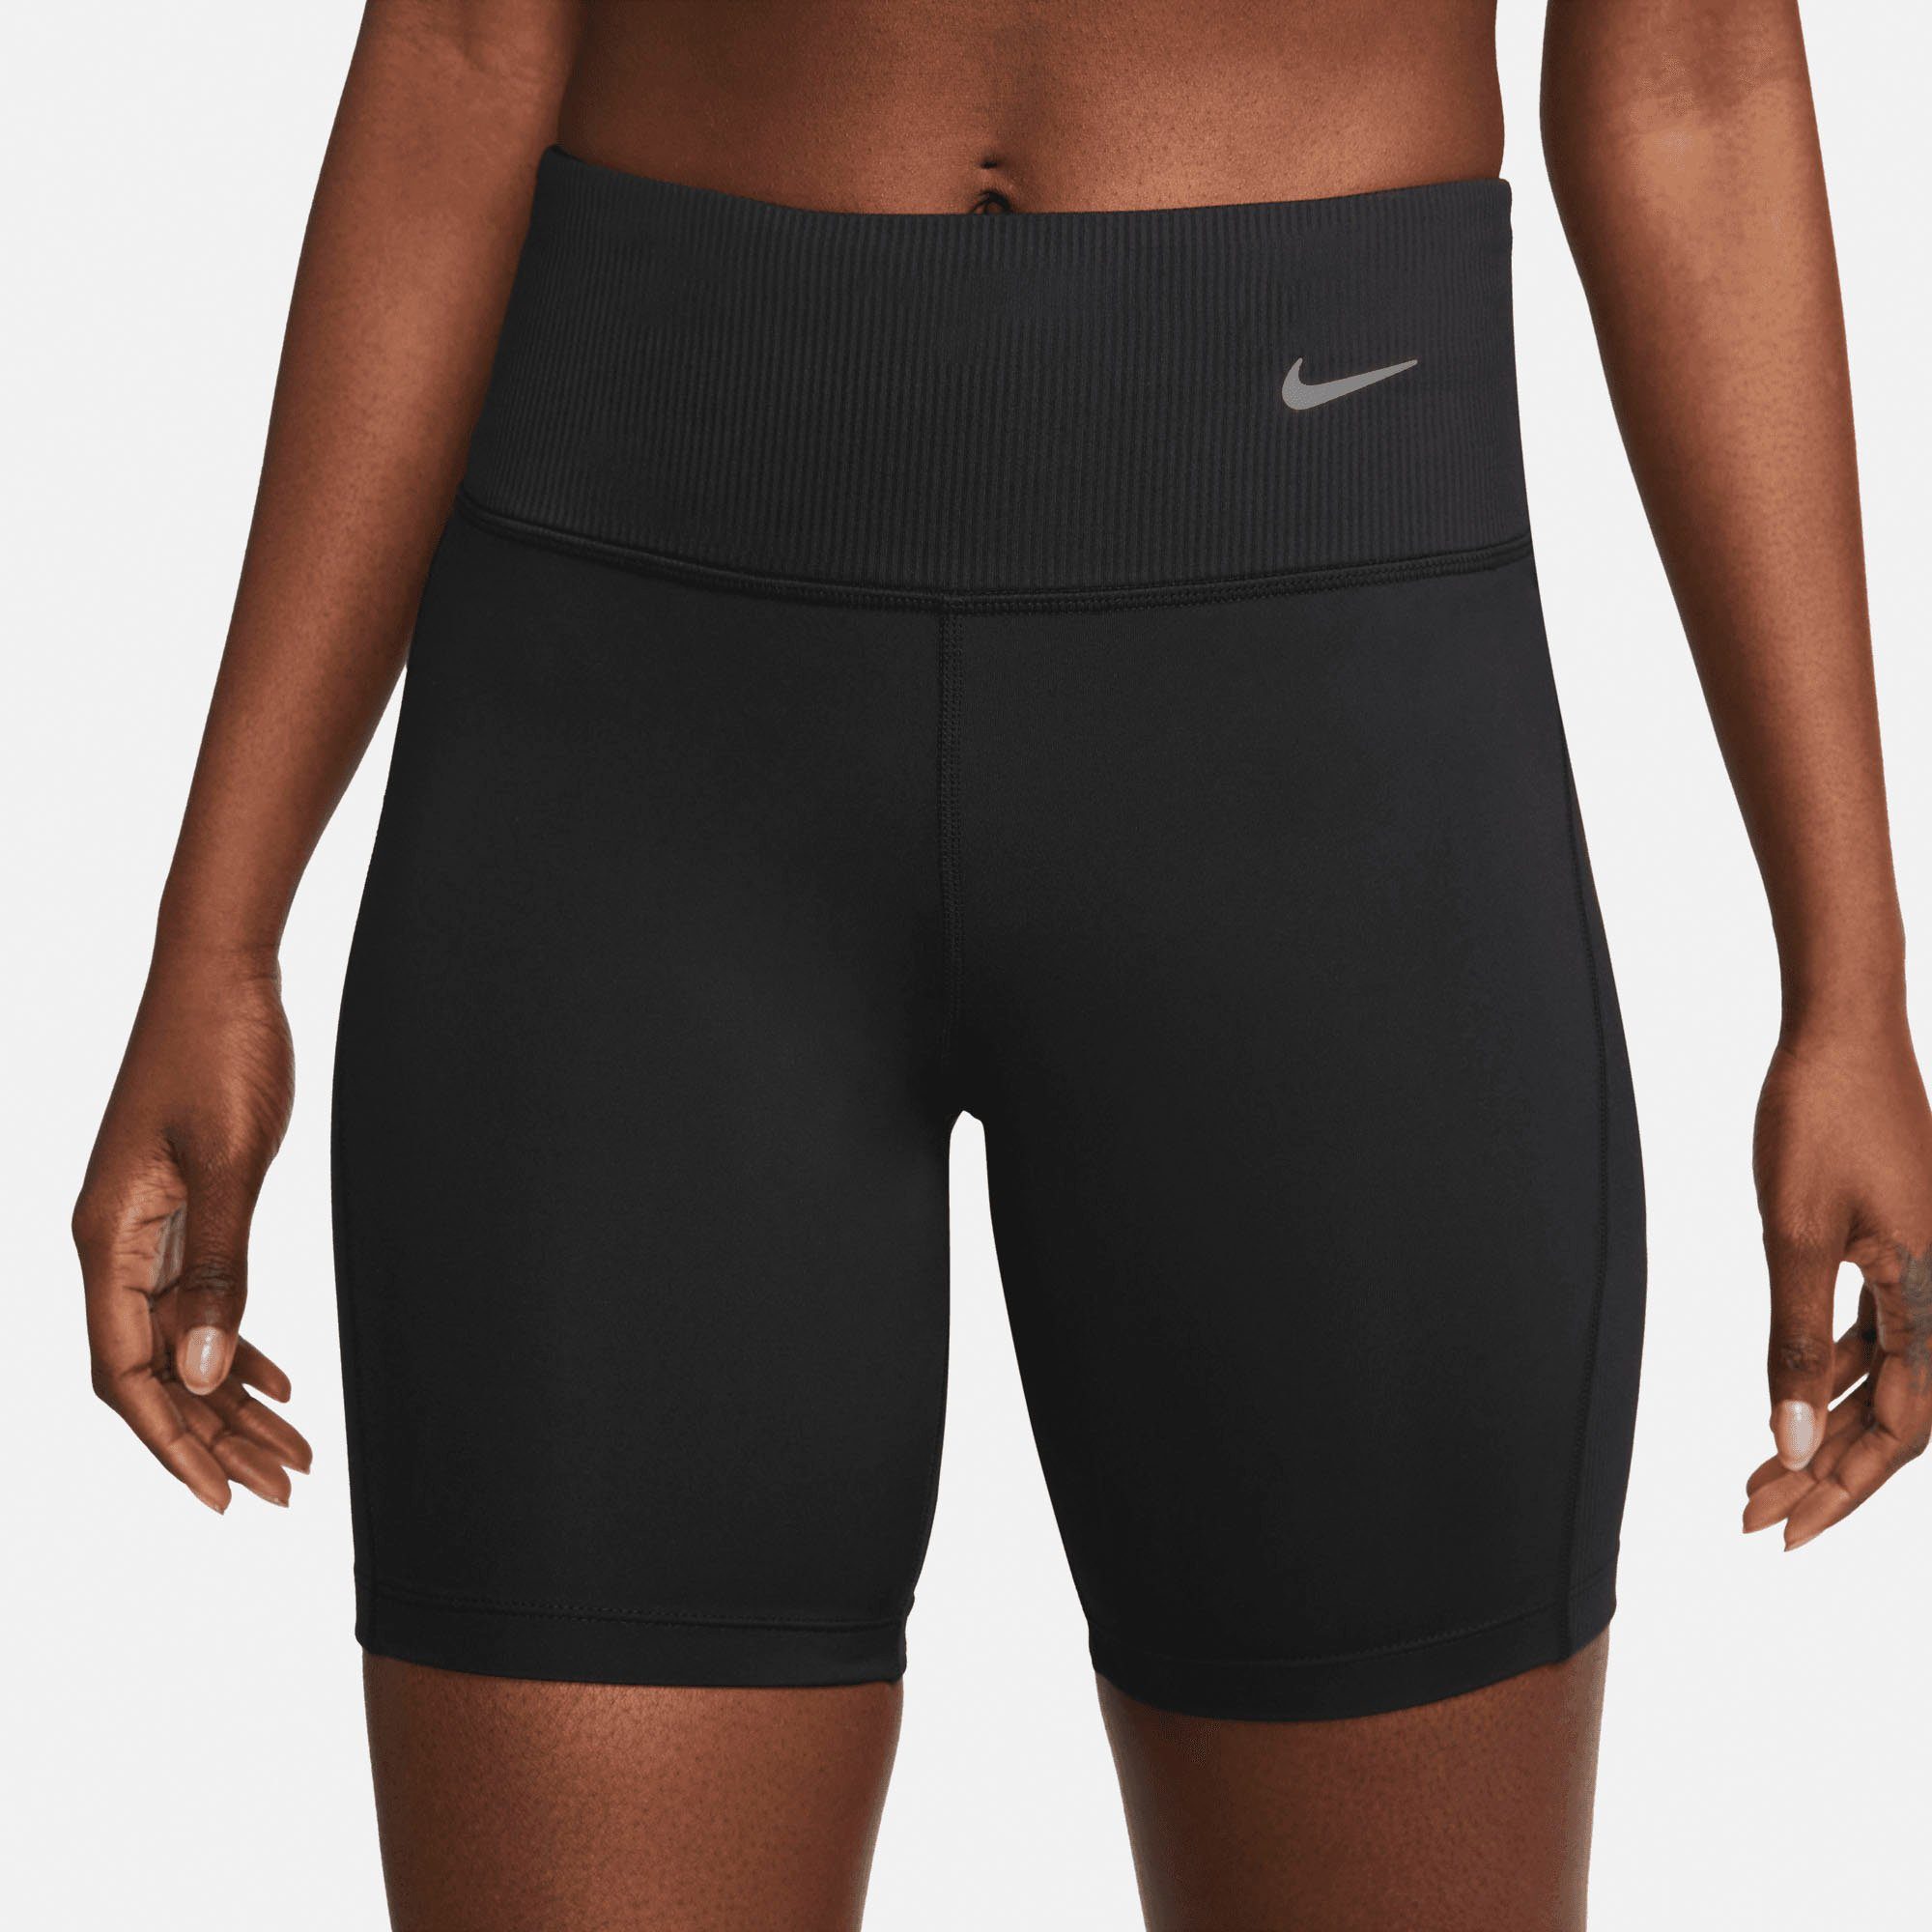 Nike Lauftights Dri-FIT Women's Shorts schwarz